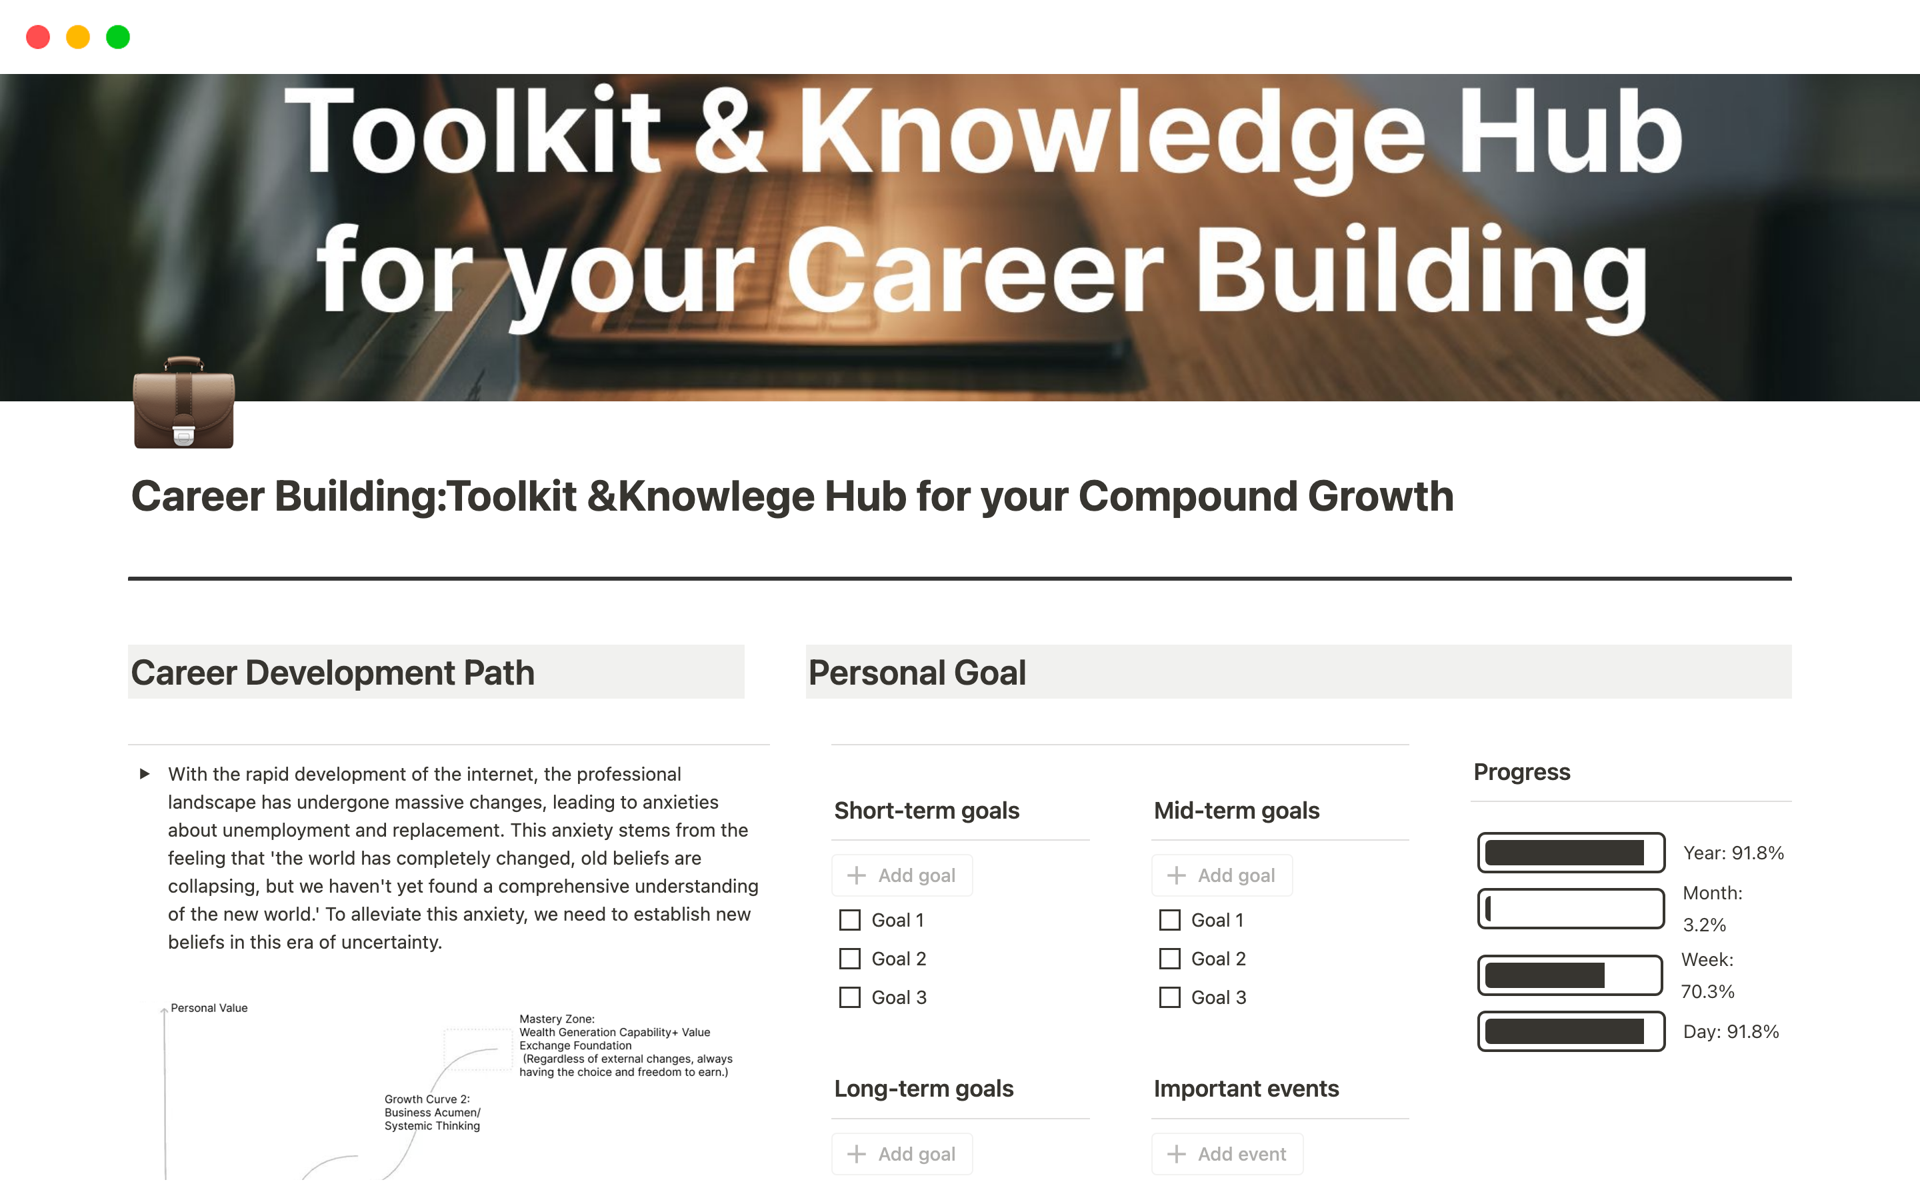 Aperçu du modèle de Career Building:Toolkit & Knowledge Hub for Growth